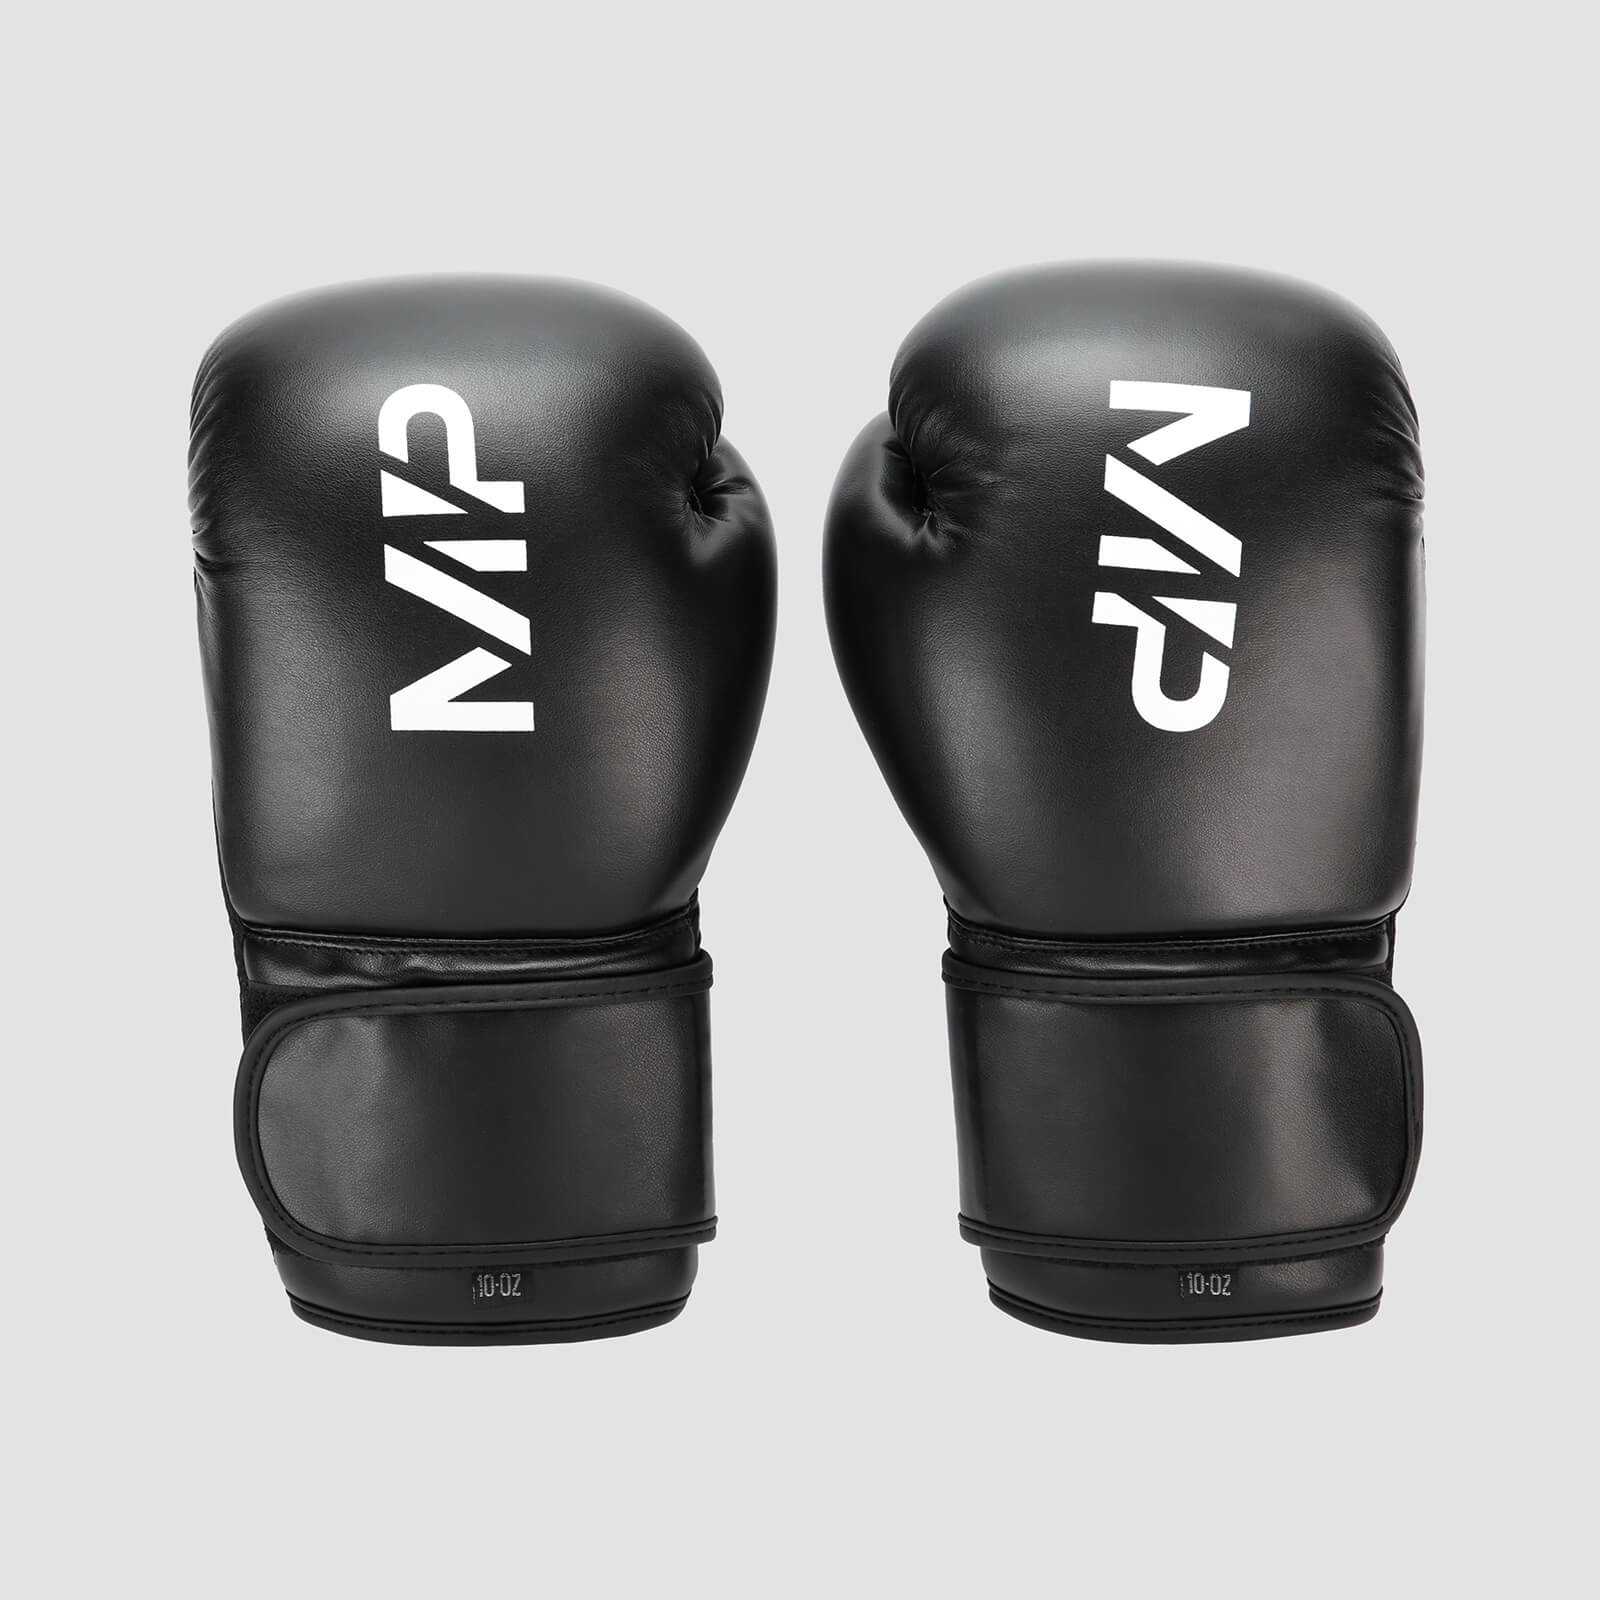 Gants de boxe MP – Noir - 12oz